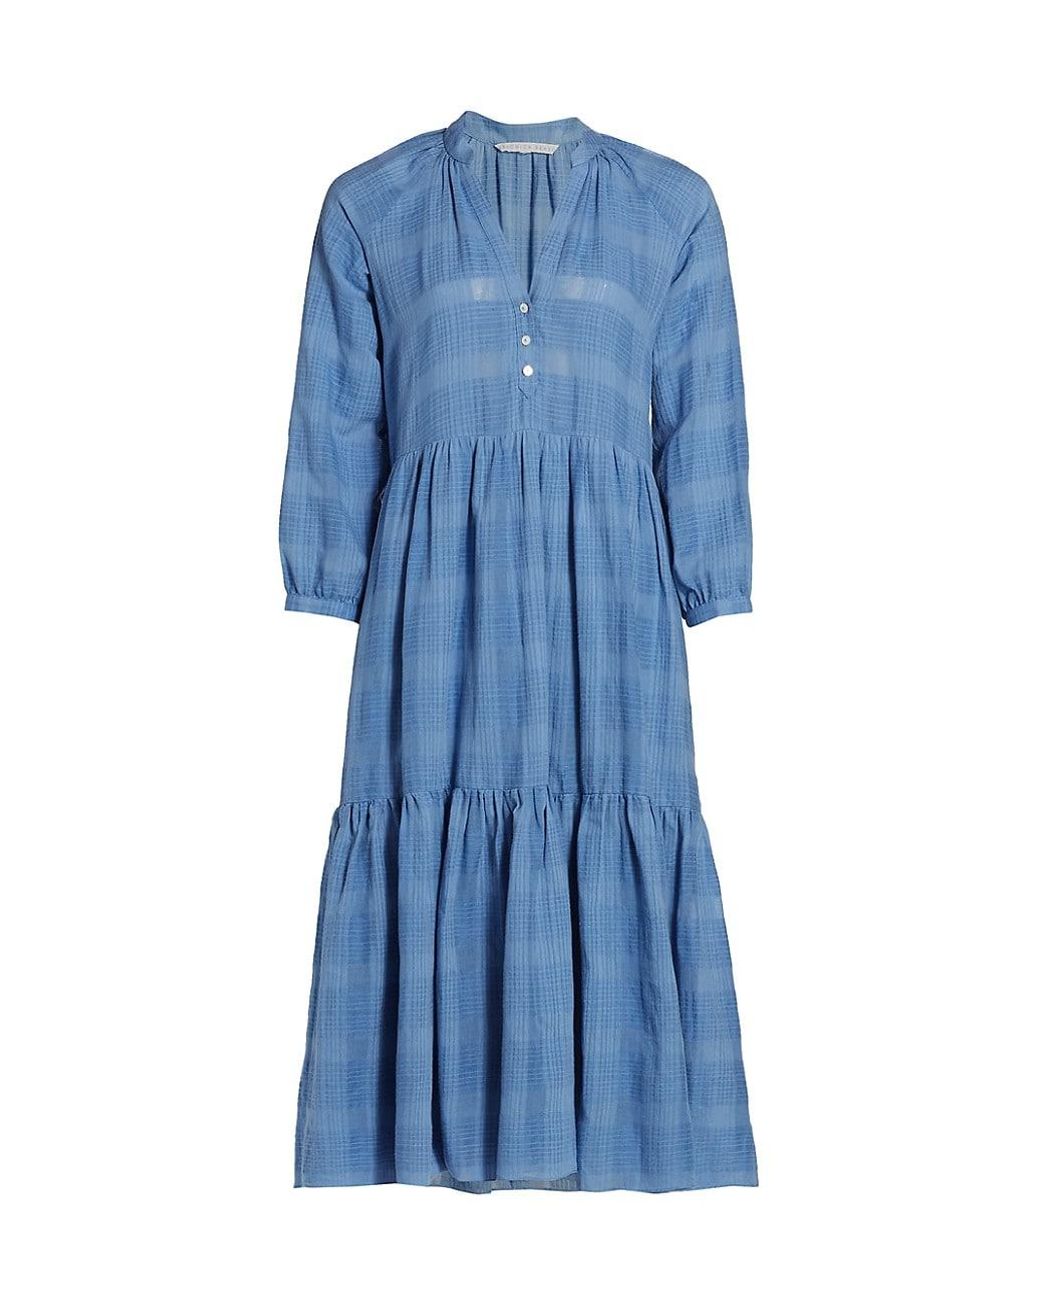 Veronica Beard Cotton Sarita Ruffle-hem Dress in Blue - Lyst